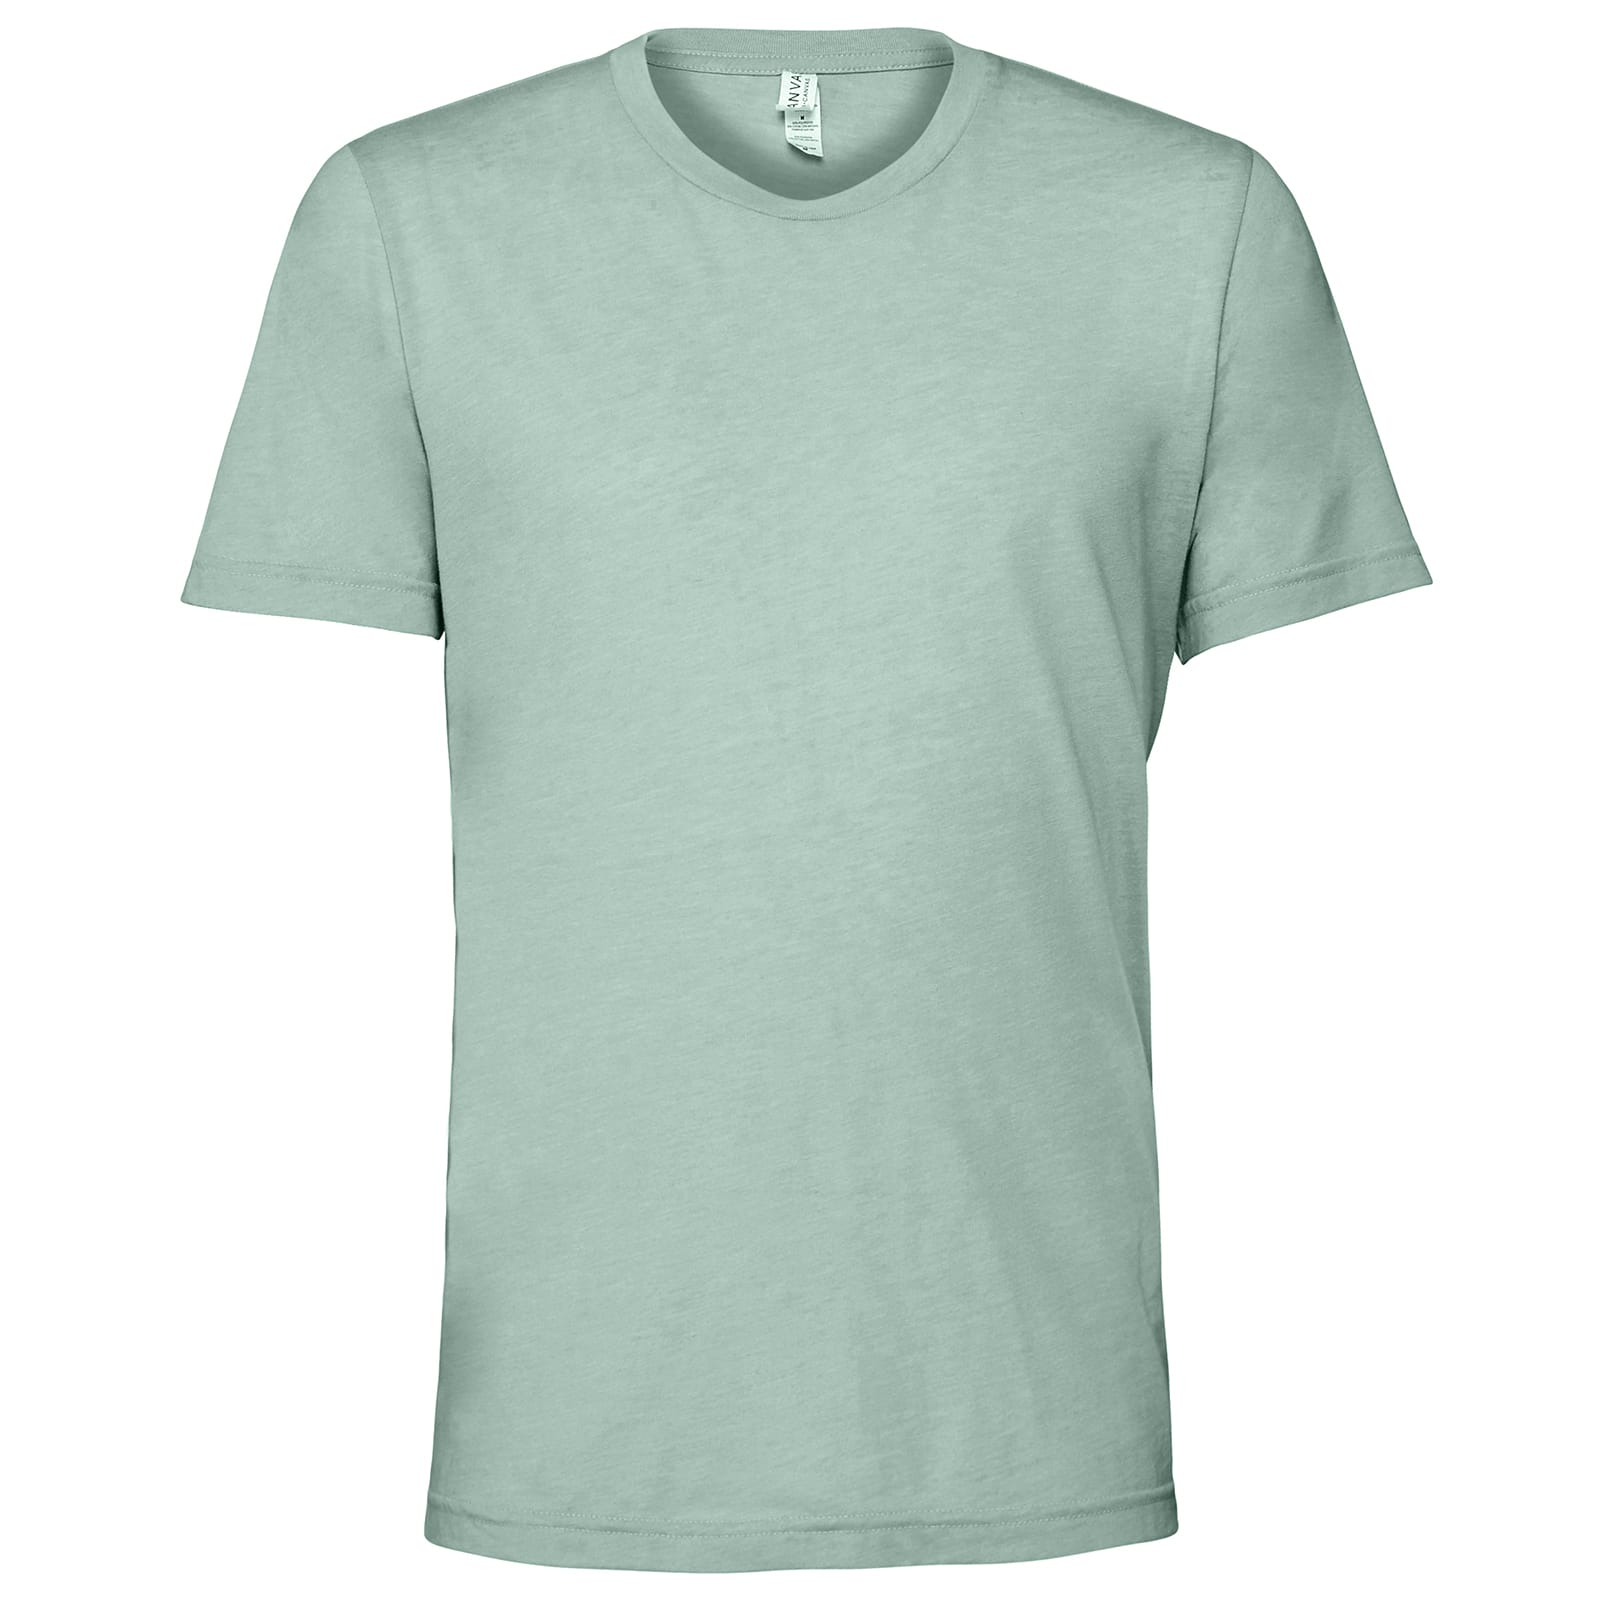 Buy in Bulk - 6 Pack: BELLA+CANVAS® Adult Unisex Tri Blend T-Shirt ...